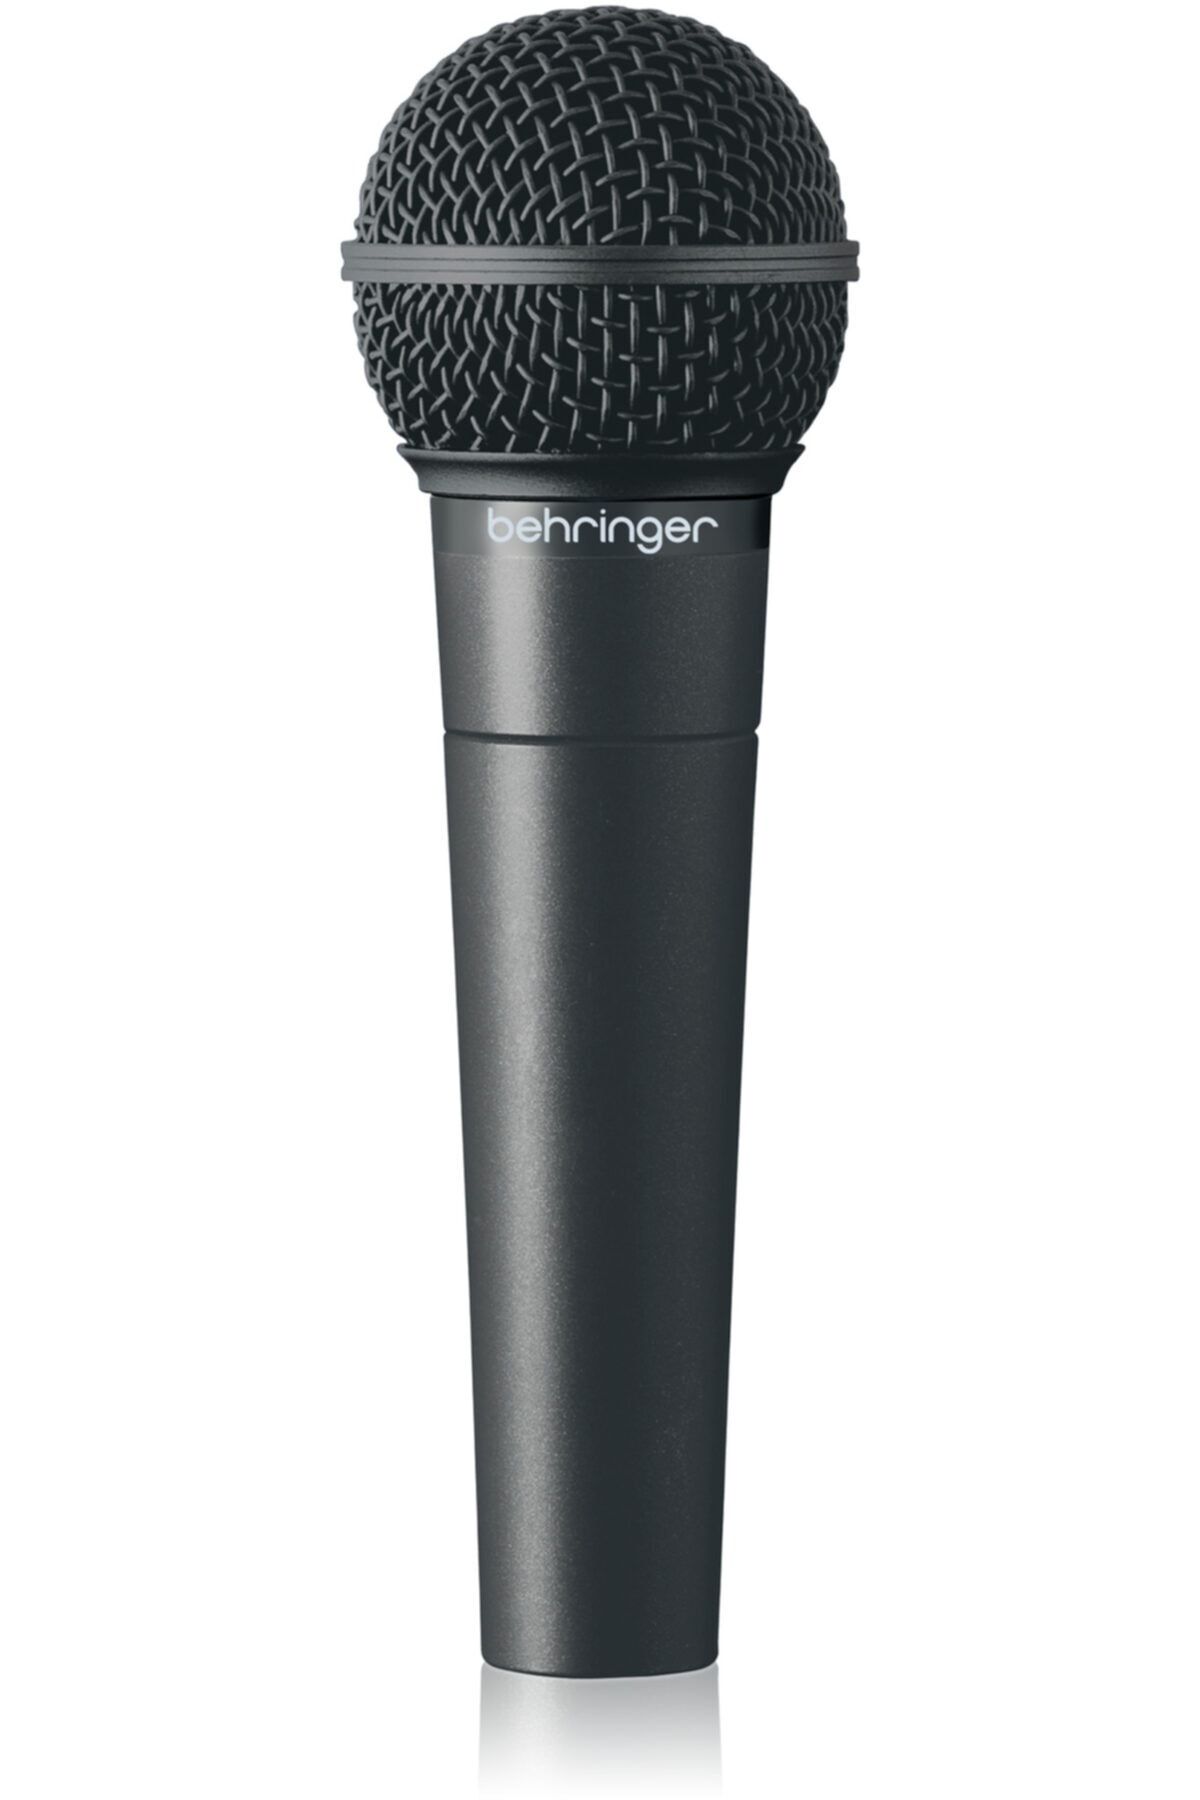 Behringer Xm8500 Dinamik Kardiyoid Vokal Mikrofon